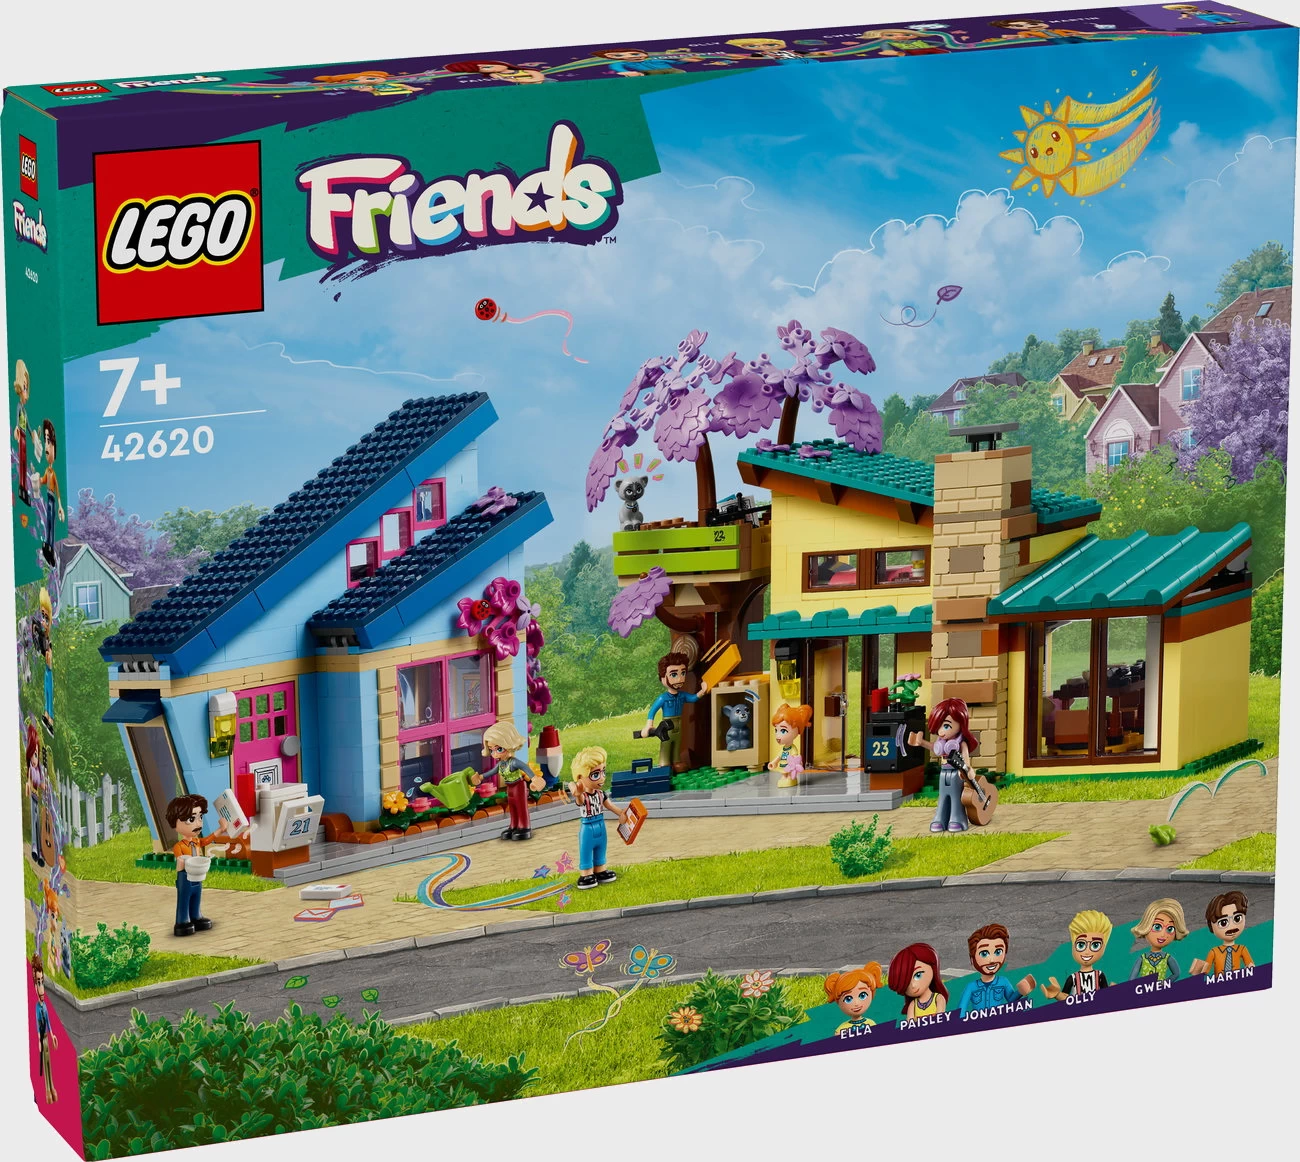 LEGO Friends 42620 - Ollys und Paisleys Familienhaus